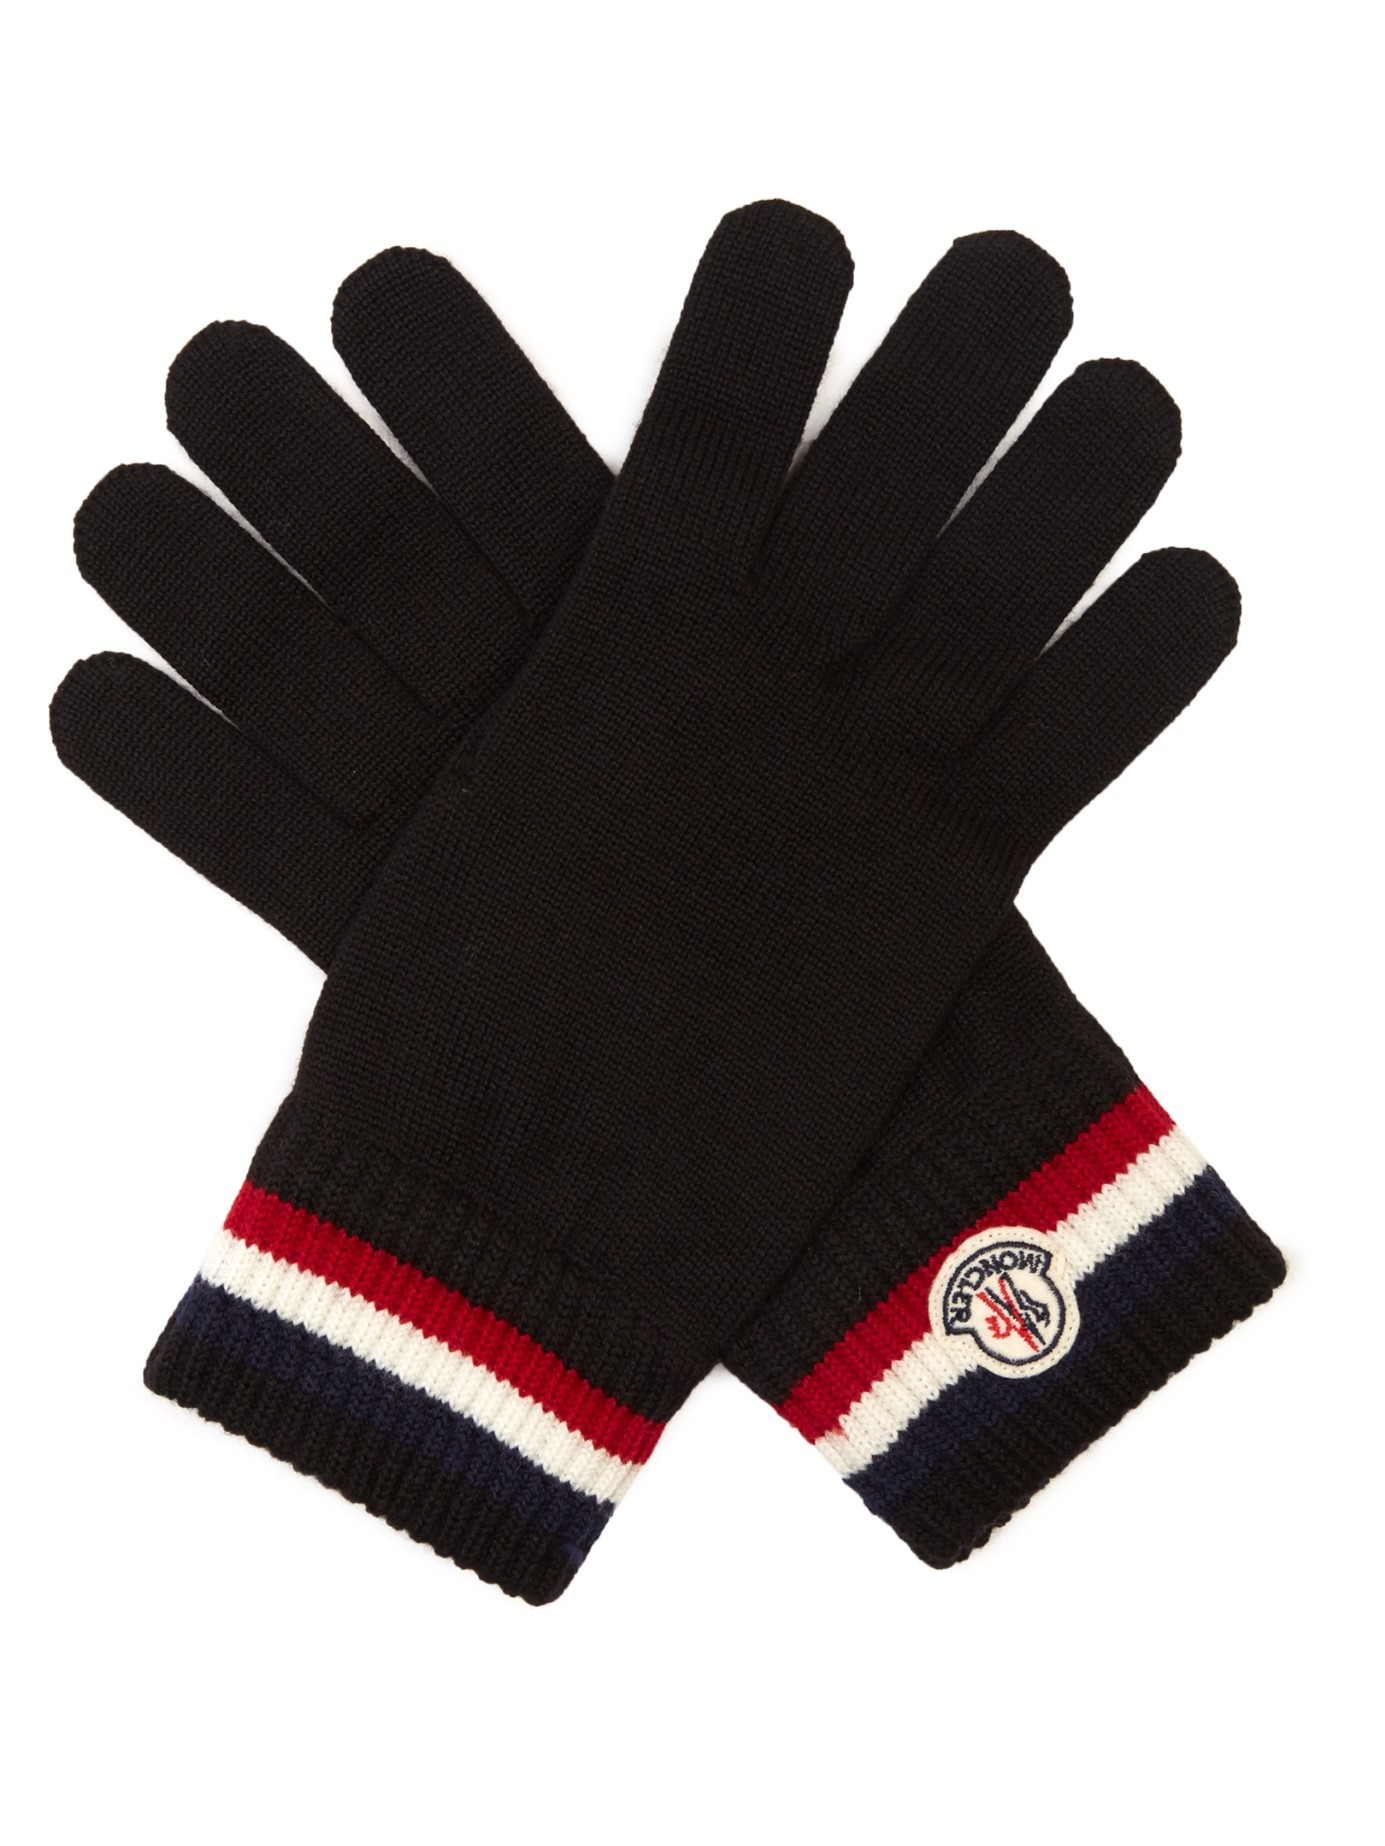 Moncler Virgin-Wool Knit Gloves in Black for Men - Lyst